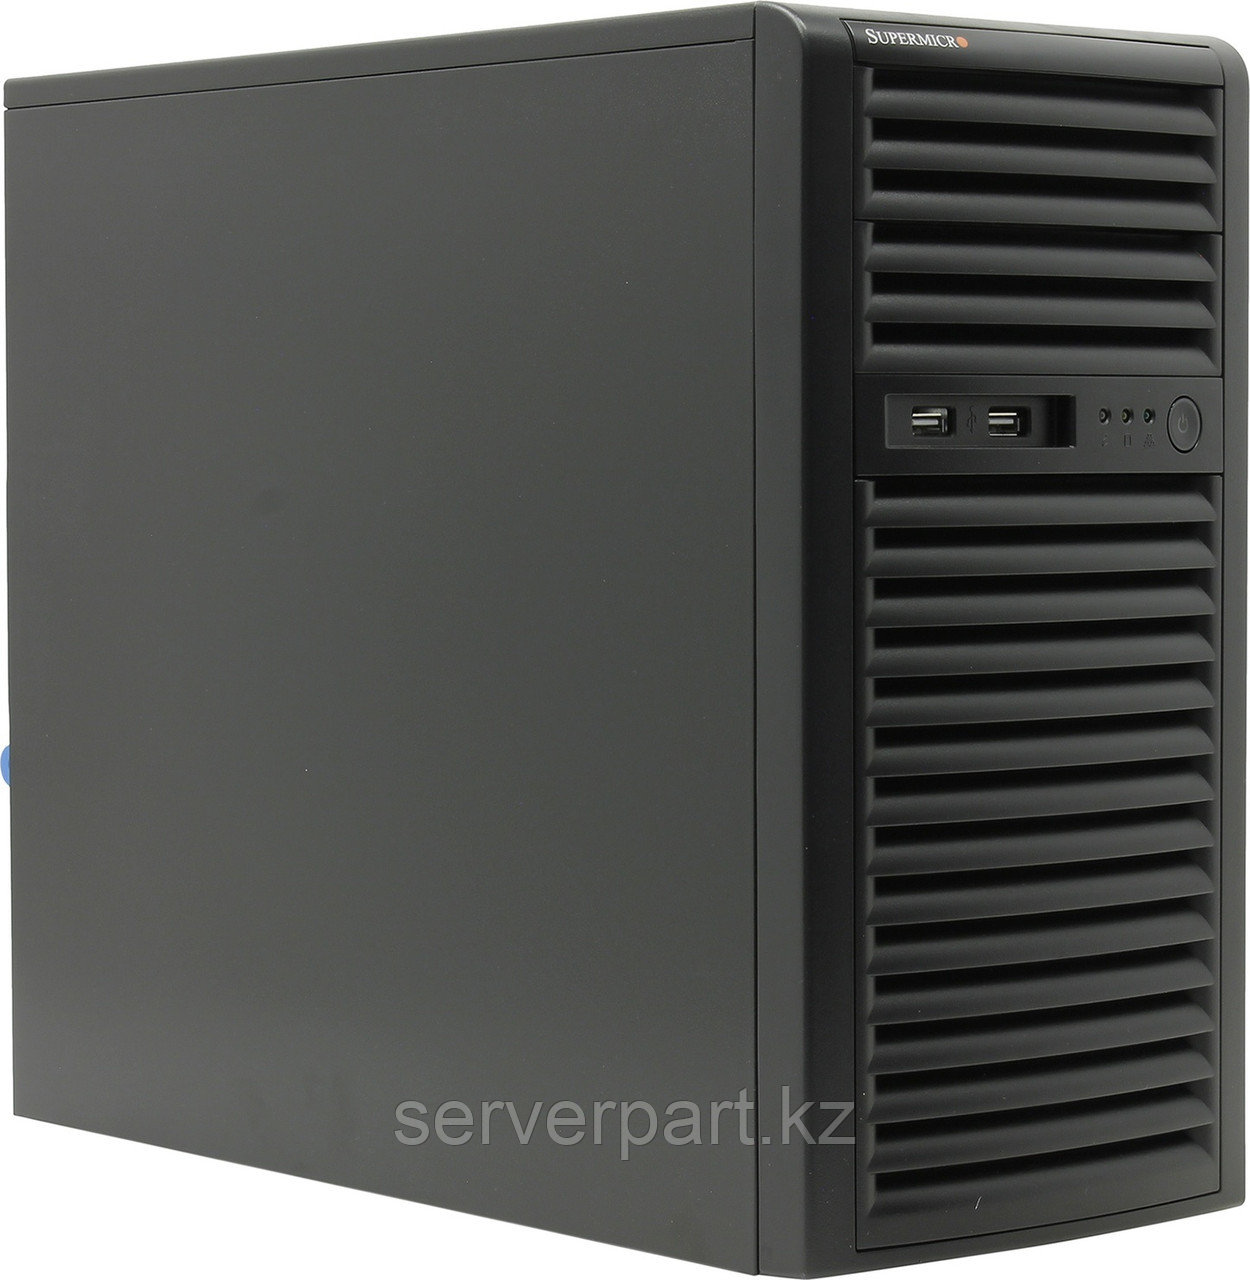 Сервер Supermicro SYS-5039D Tower/4-core intel xeon E3-1220v6 3GHz/64GB EUDIMM/1x480GB SSD RI Hyb, фото 1